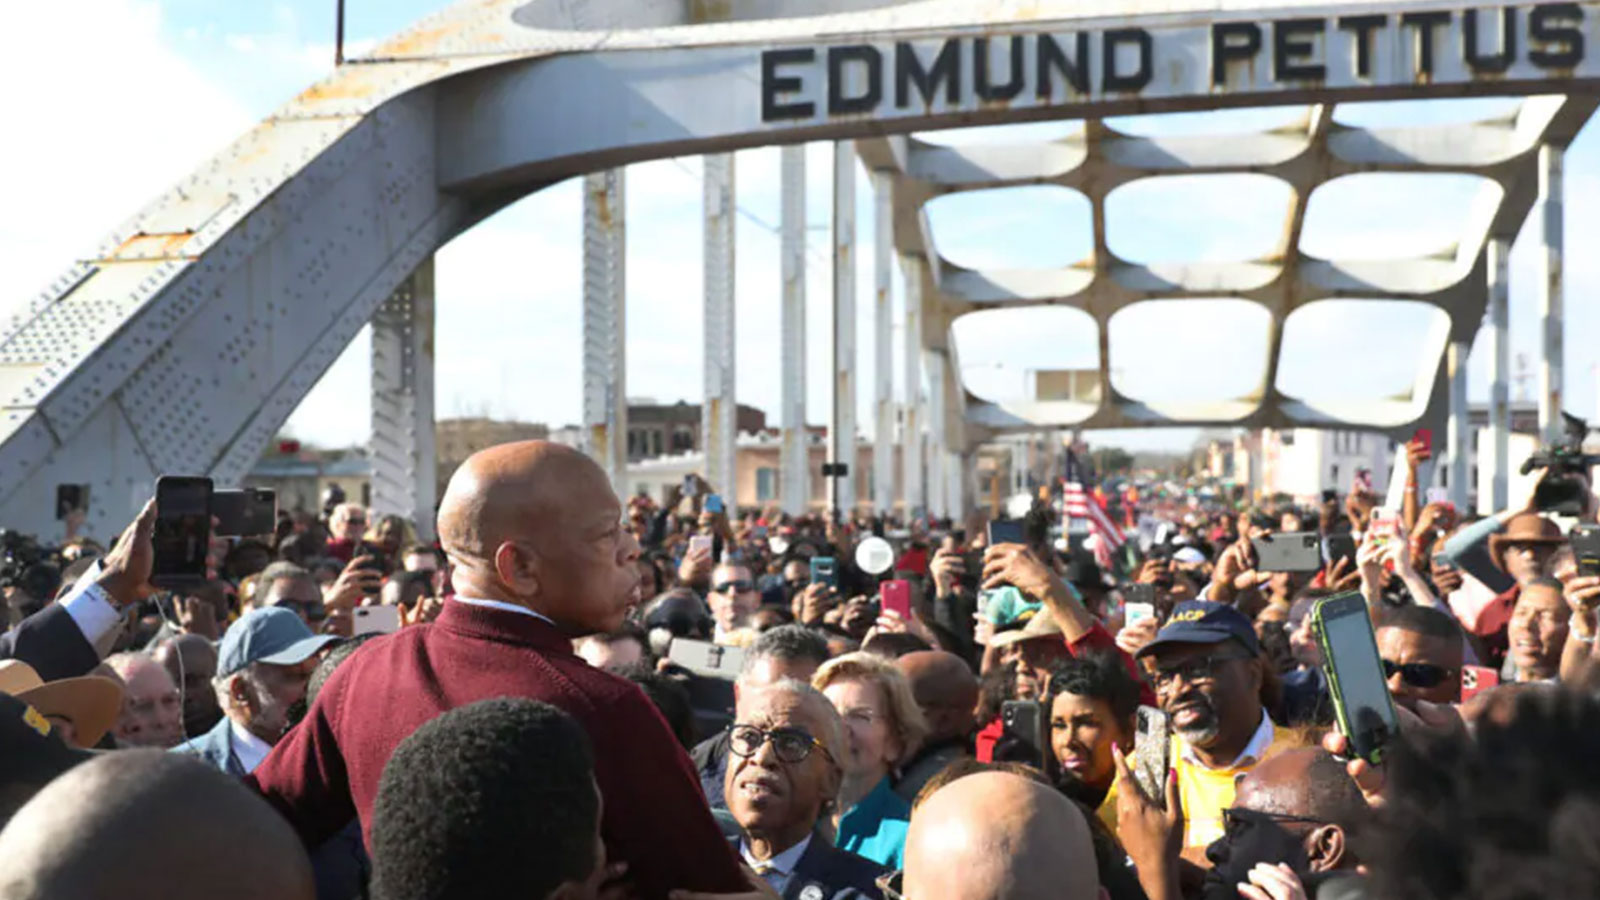 Rep. John Lewis (D-GA) speaks to the crowd at the Edmund Pettus Bridge crossing reenactment marking 55th anniversary of Selma’s Bloody Sunday on March 1, 2020 in Selma, Alabama.